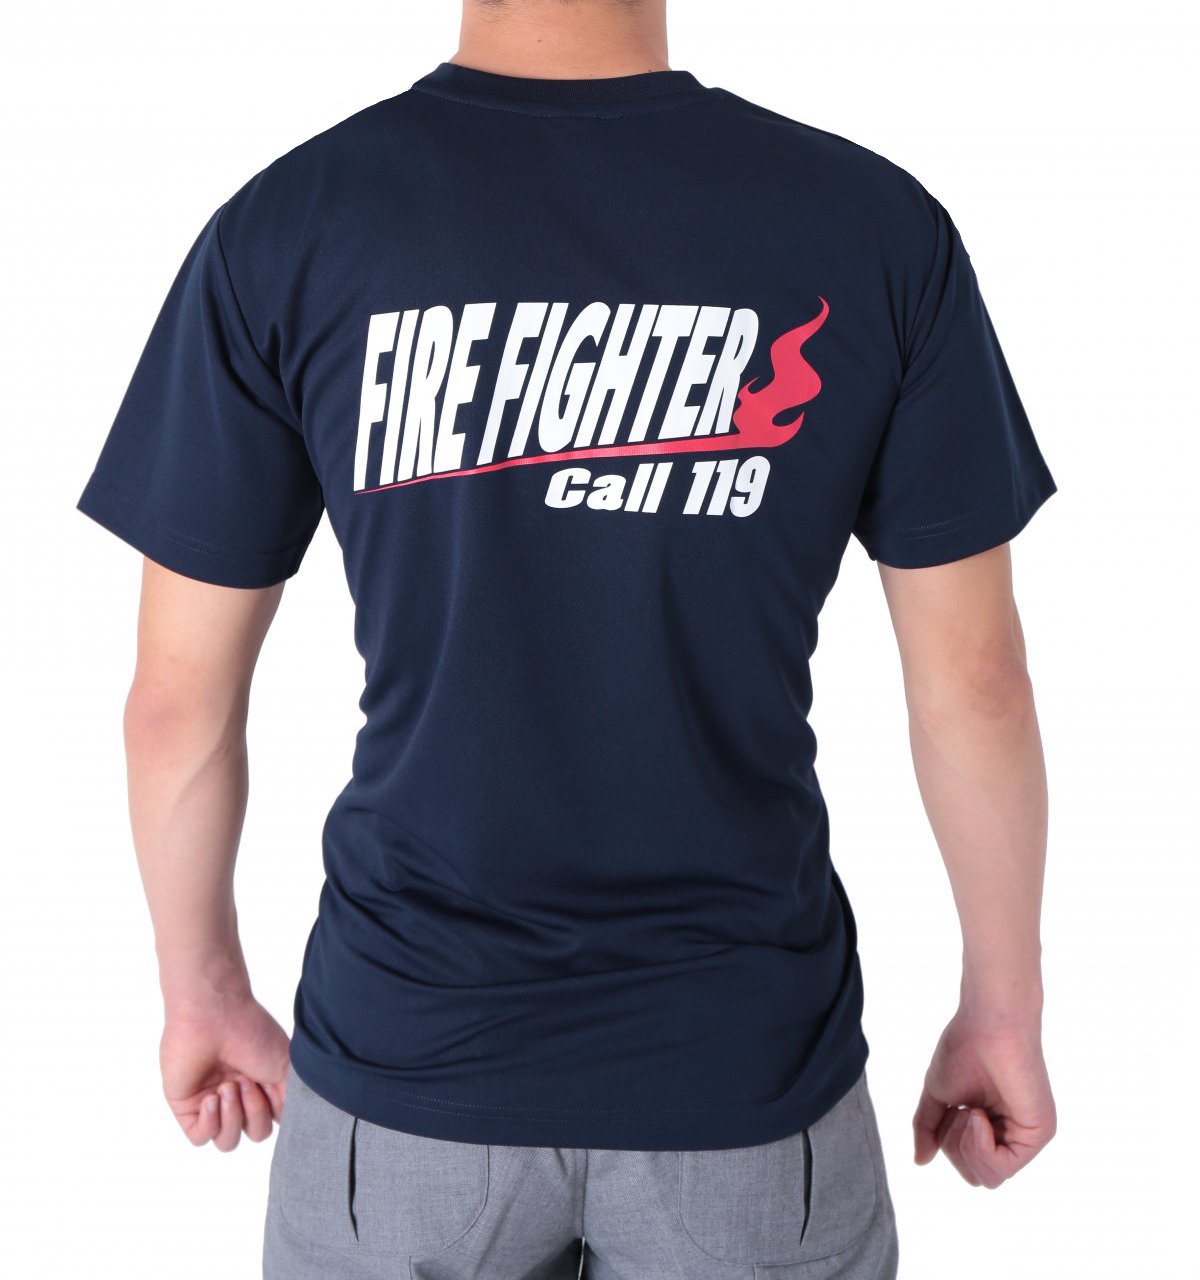 FIRE FIGHTER Call119 デザインTシャツ【画像1】